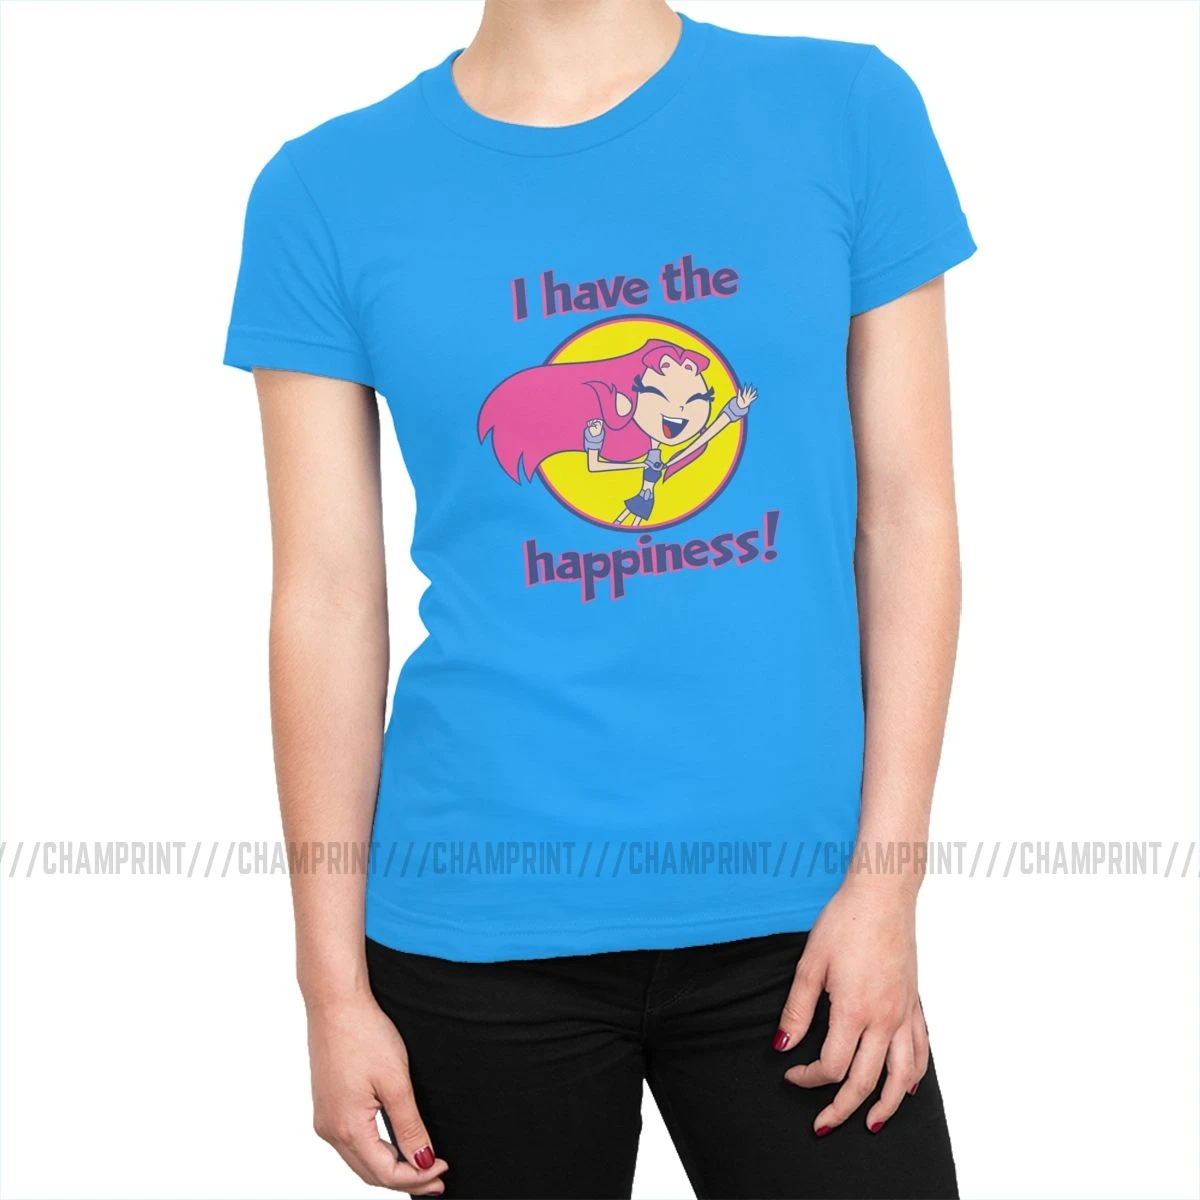 Teen Titans Go Starfire I Have The футболка с надписью Happiness женские футболки Kawaii футболки, топ, забавная Женская одежда с графикой - Цвет: Мятный